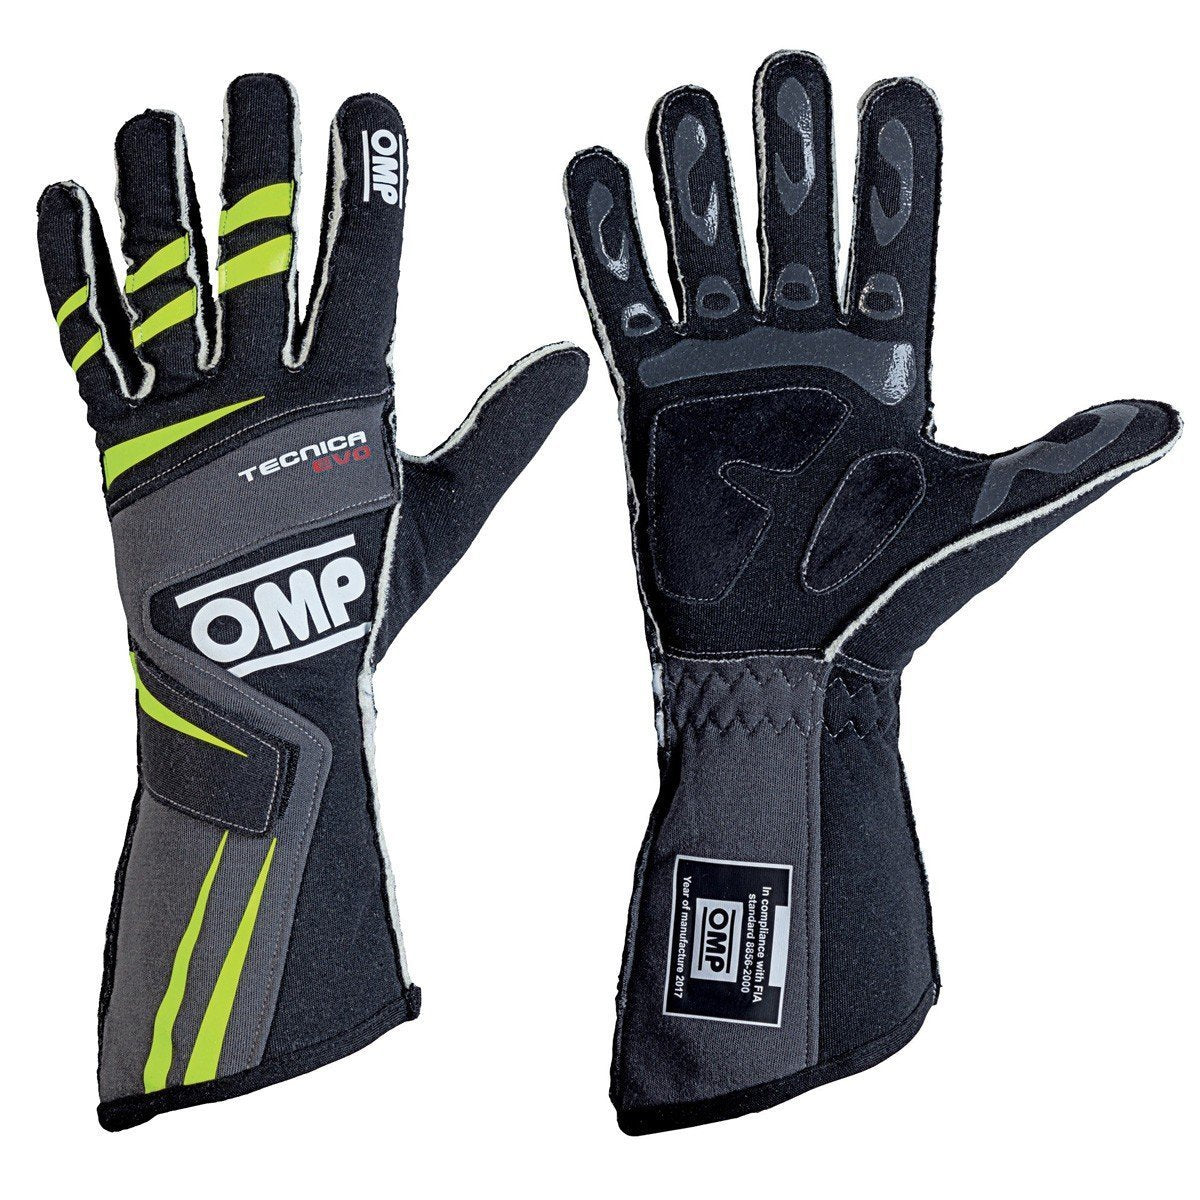 OMP Racing Tecnica Evo Driving Gloves